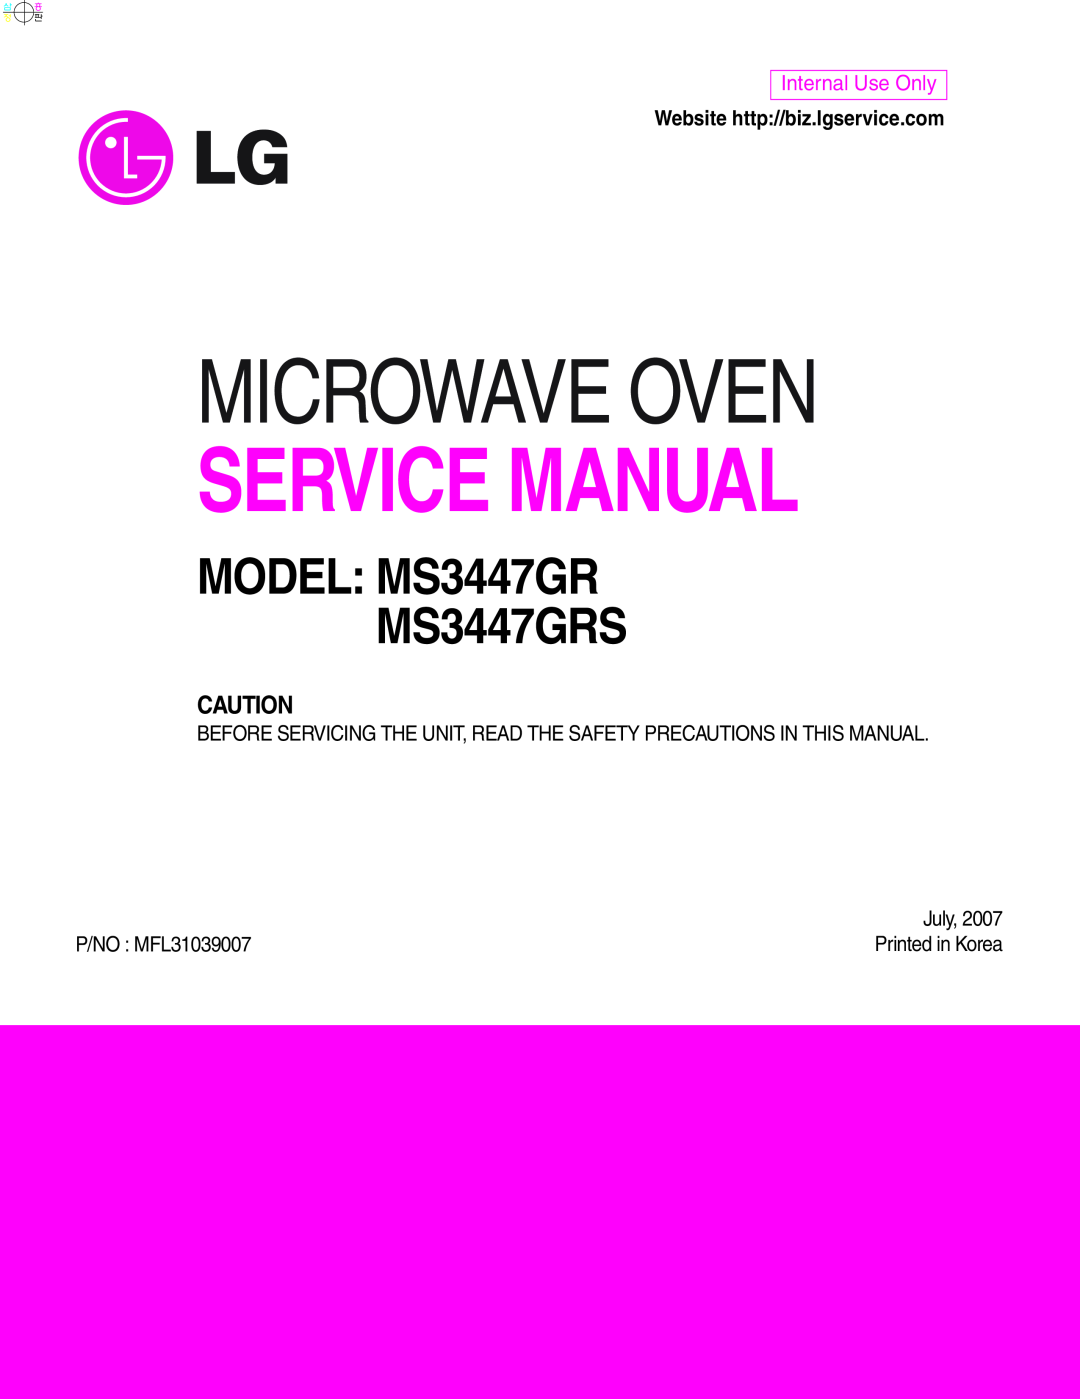 LG Electronics MS3447GRS service manual Website http//biz.lgservice.com, July, P/NO MFL31039007, Microwave Oven 